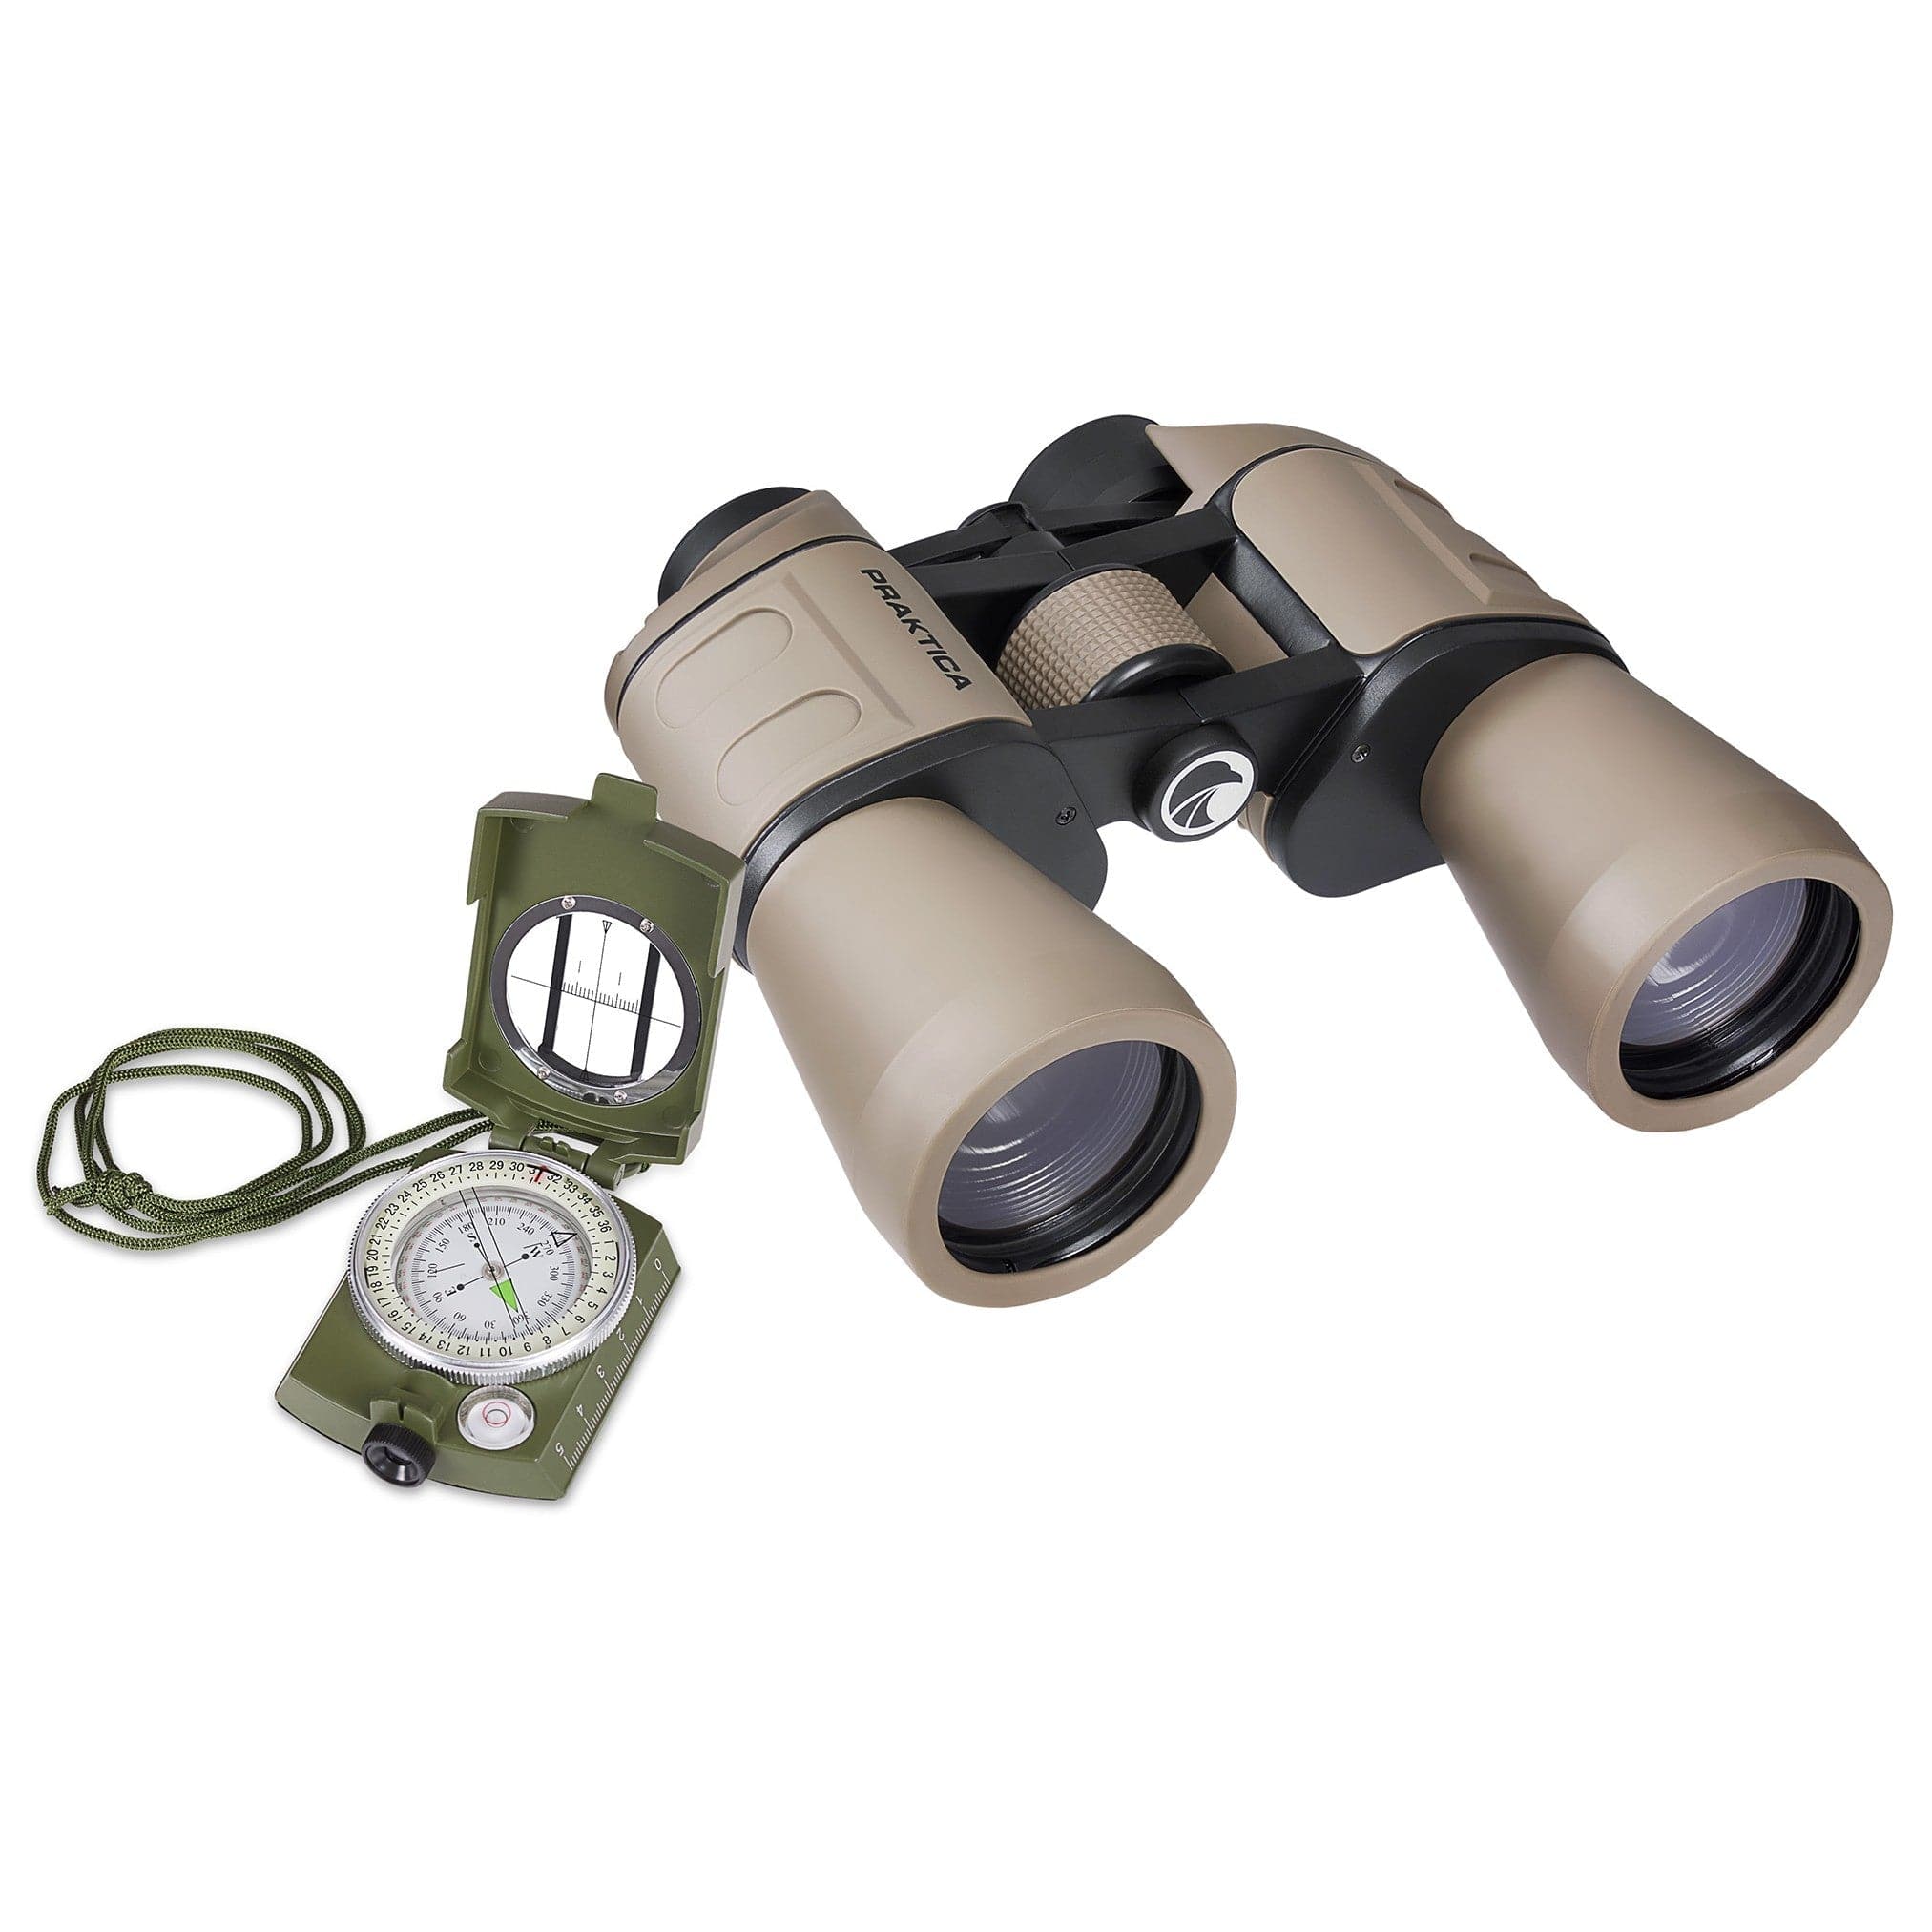 PRAKTICA Falcon 10x50mm Porro Prism Field Binoculars - Sand (Binoculars + Compass)